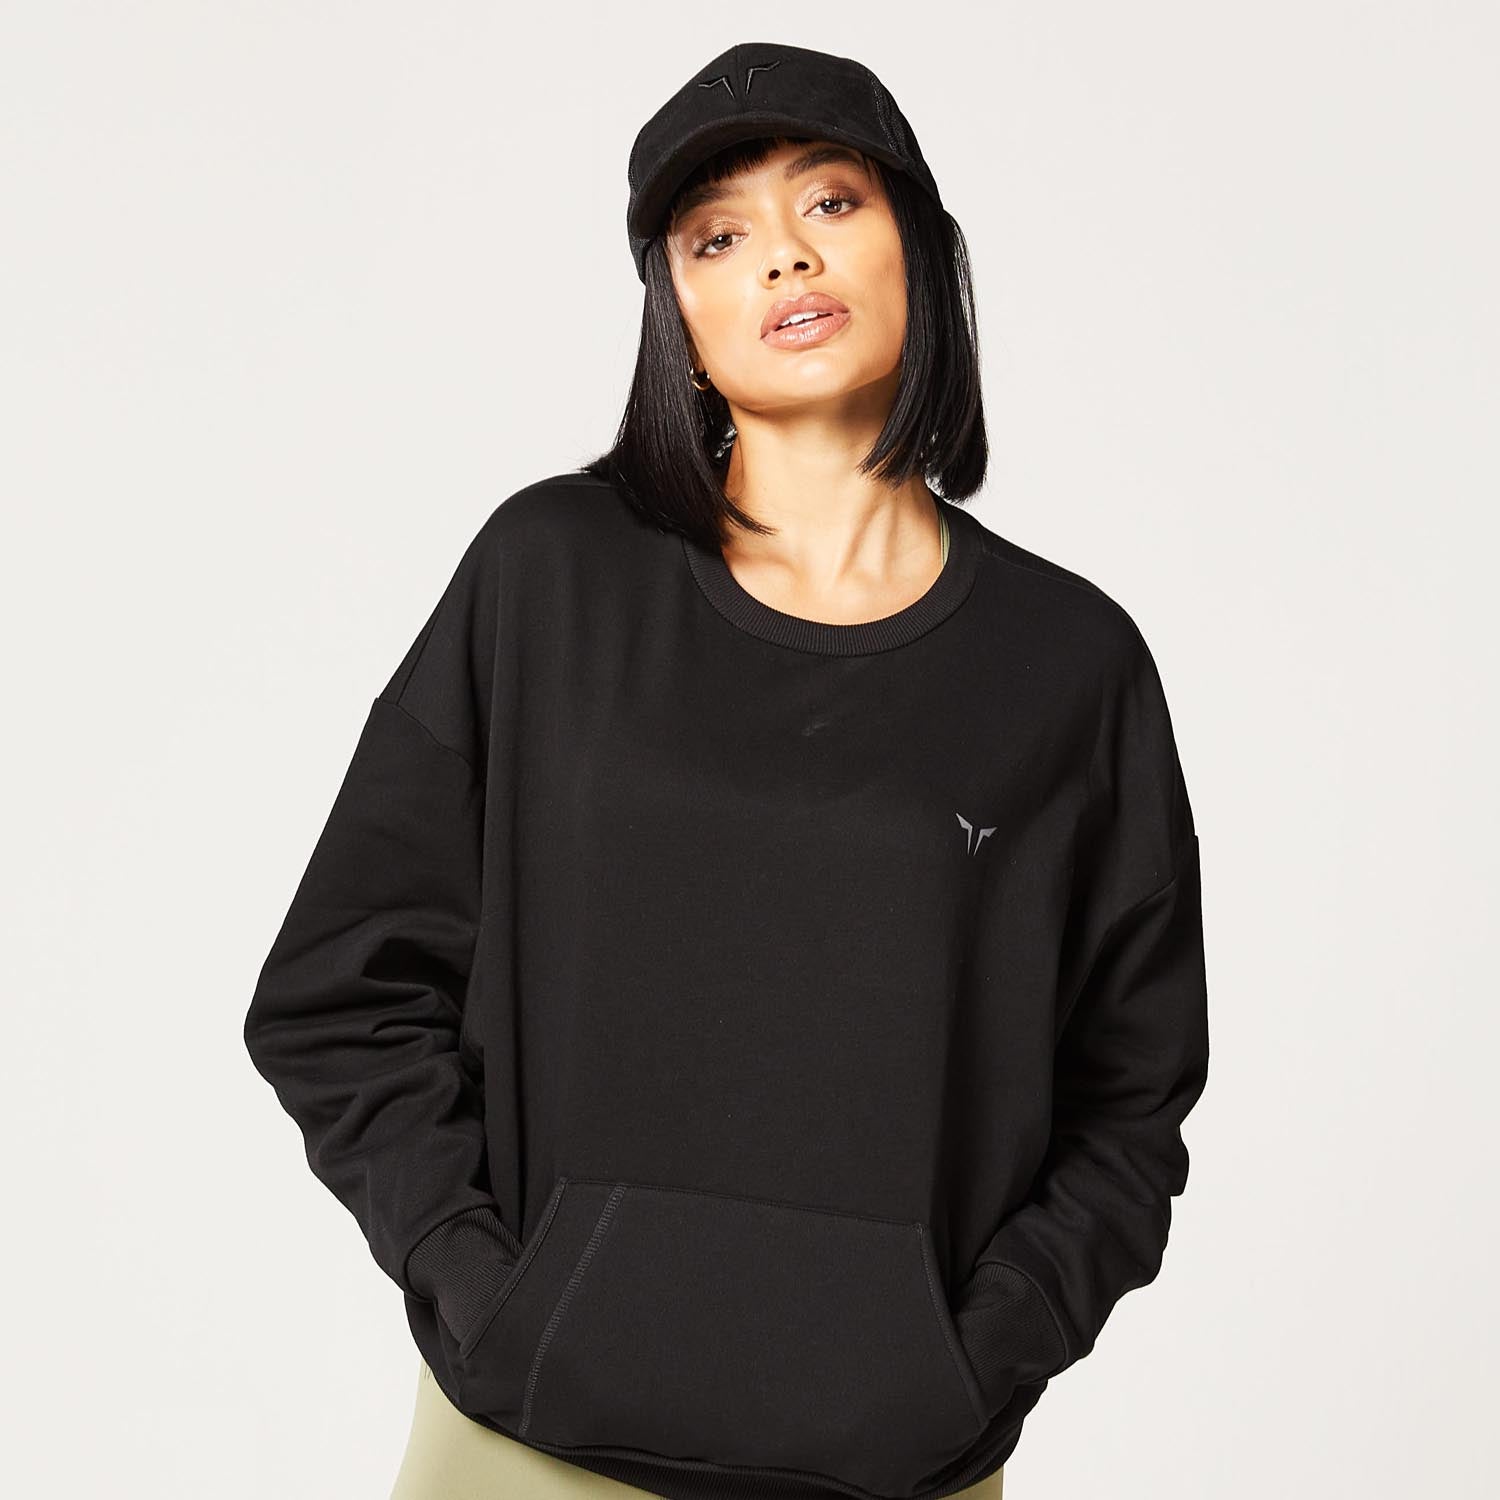 squatwolf-workout-clothes-code-after-class-sweatshirt-black-gym-hoodies-women